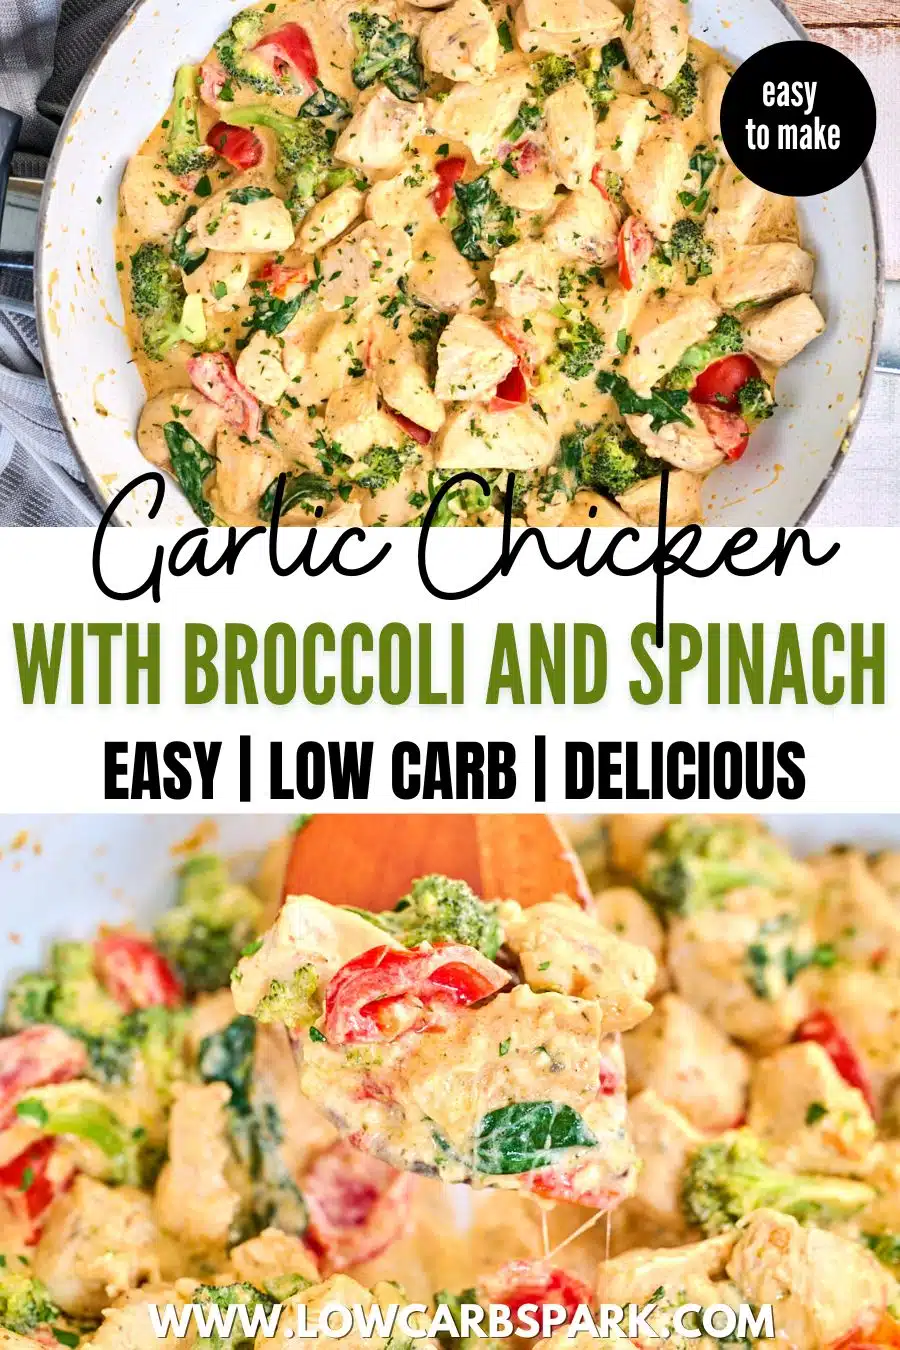 Garlic Chicken with Broccoli and Spinach (20 Minute Recipe)